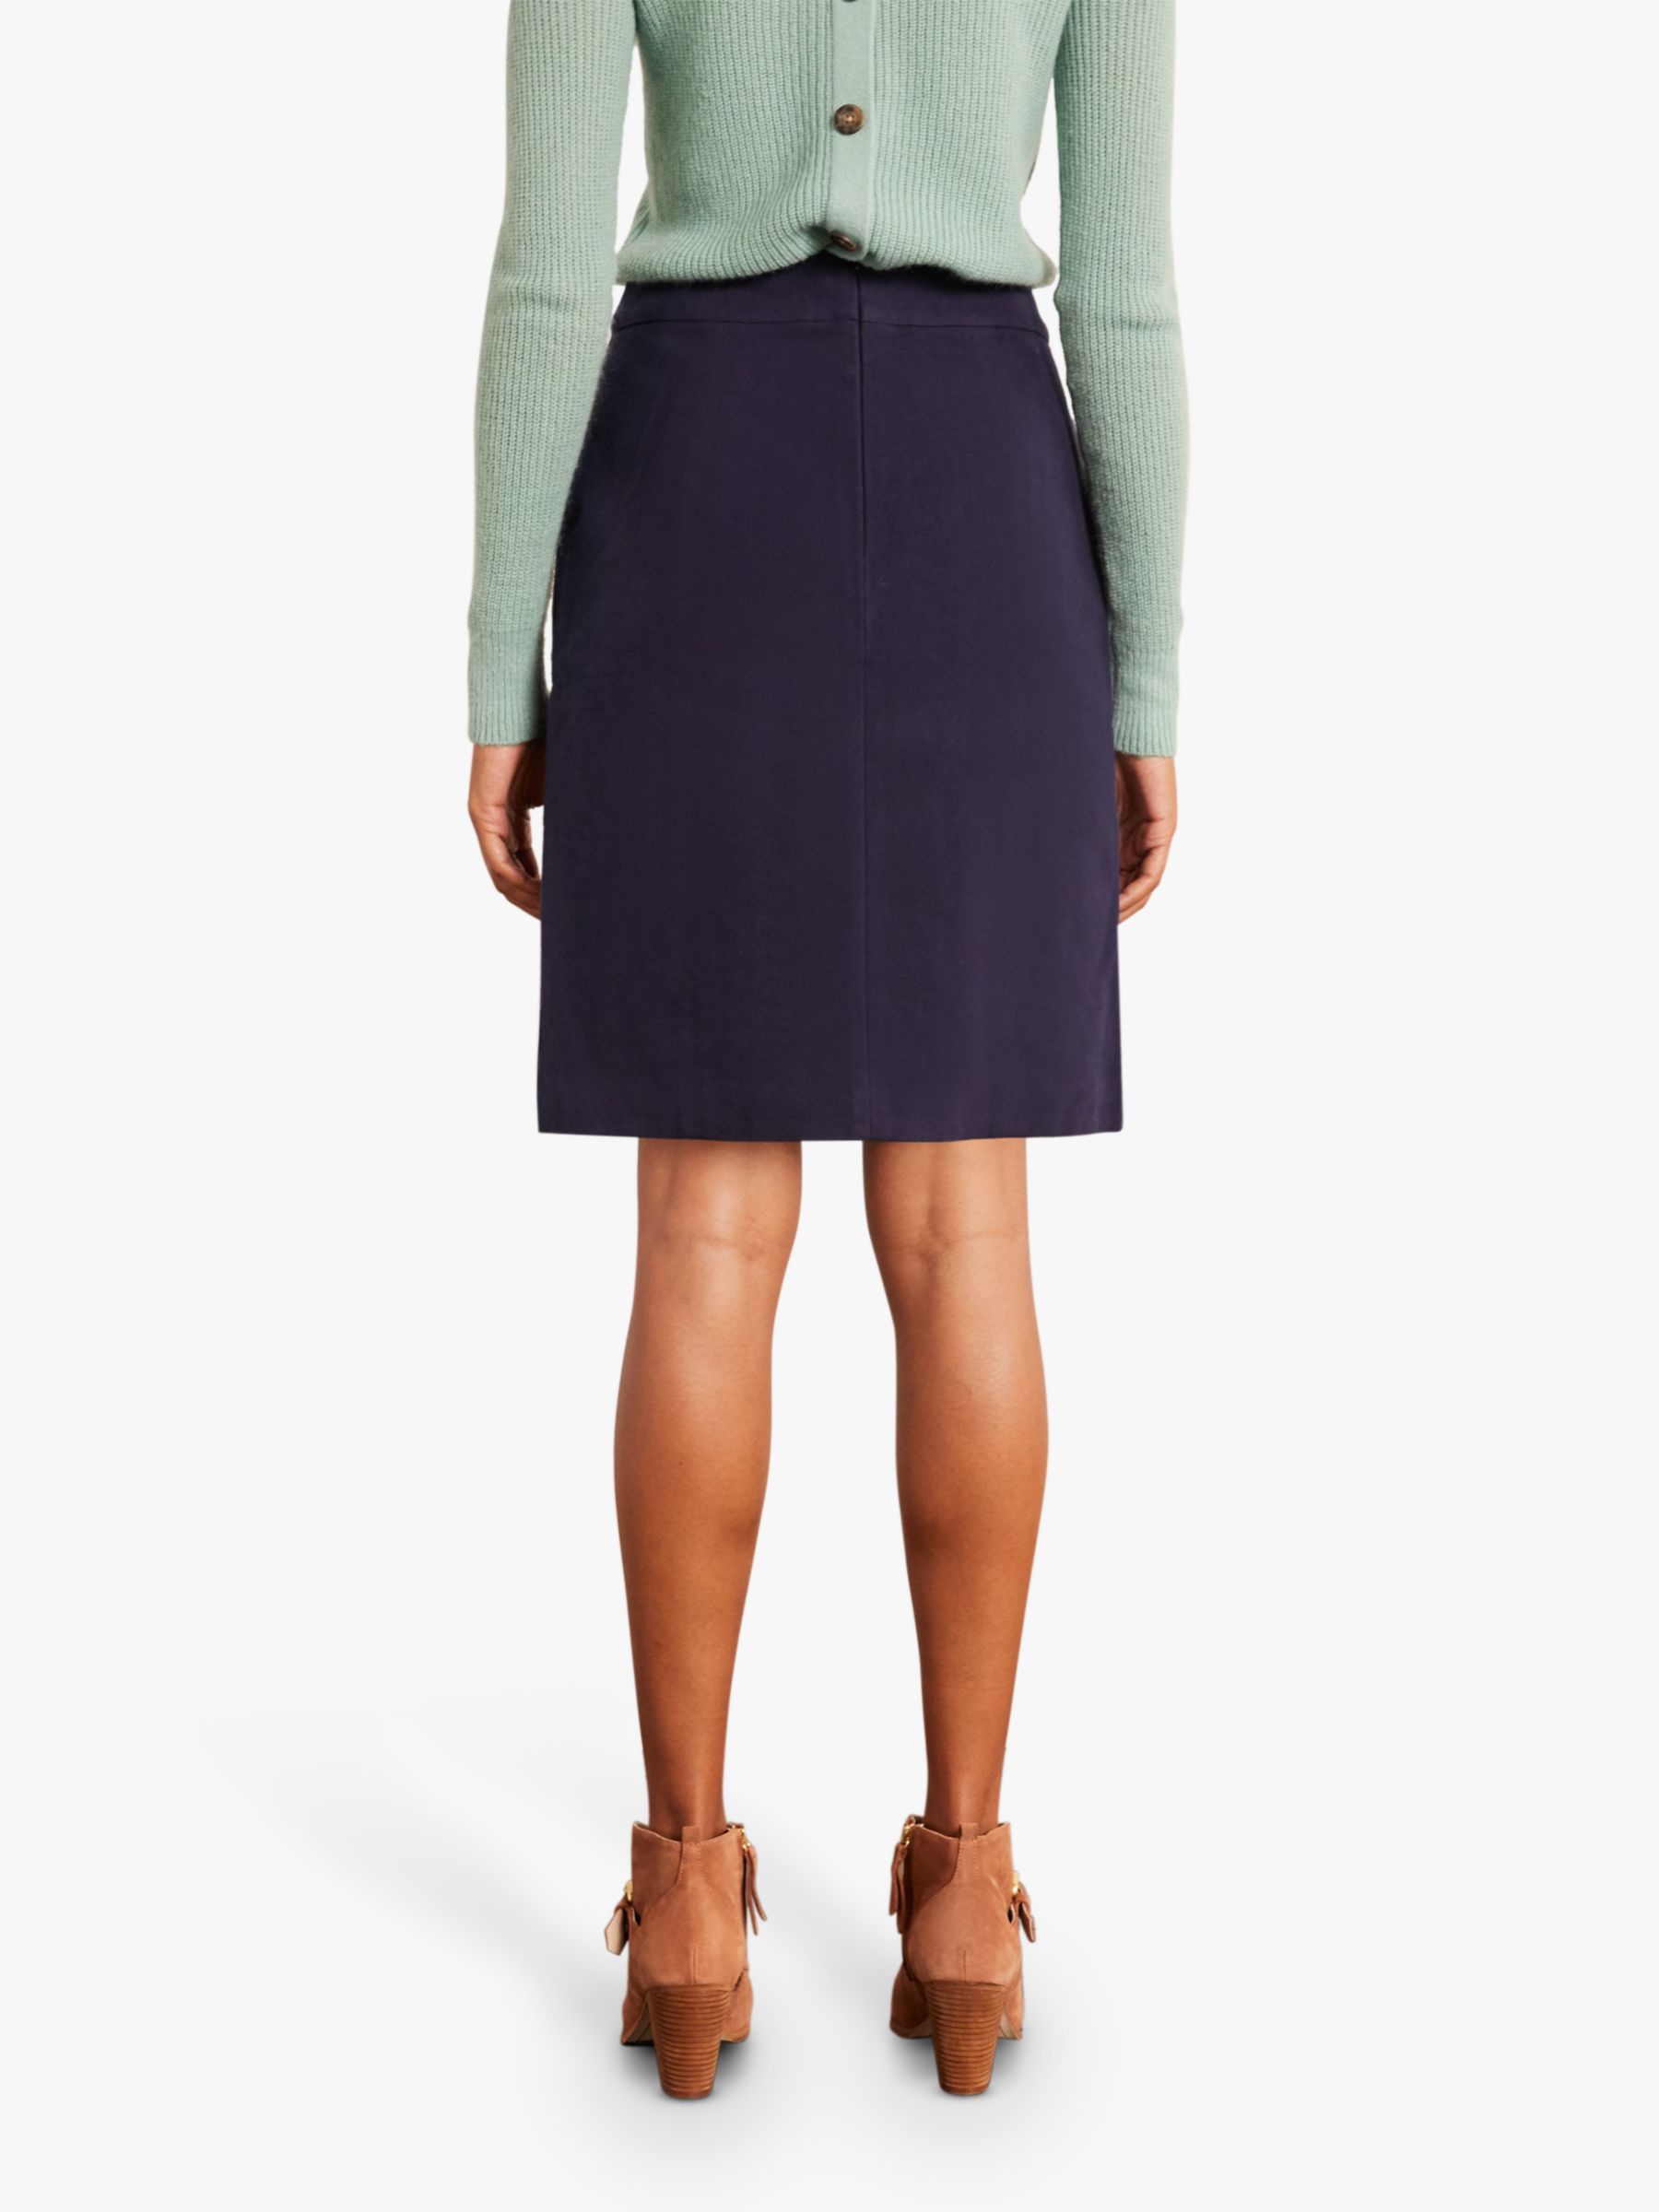 Boden Auria A-Line Mini Skirt, Navy at John Lewis & Partners